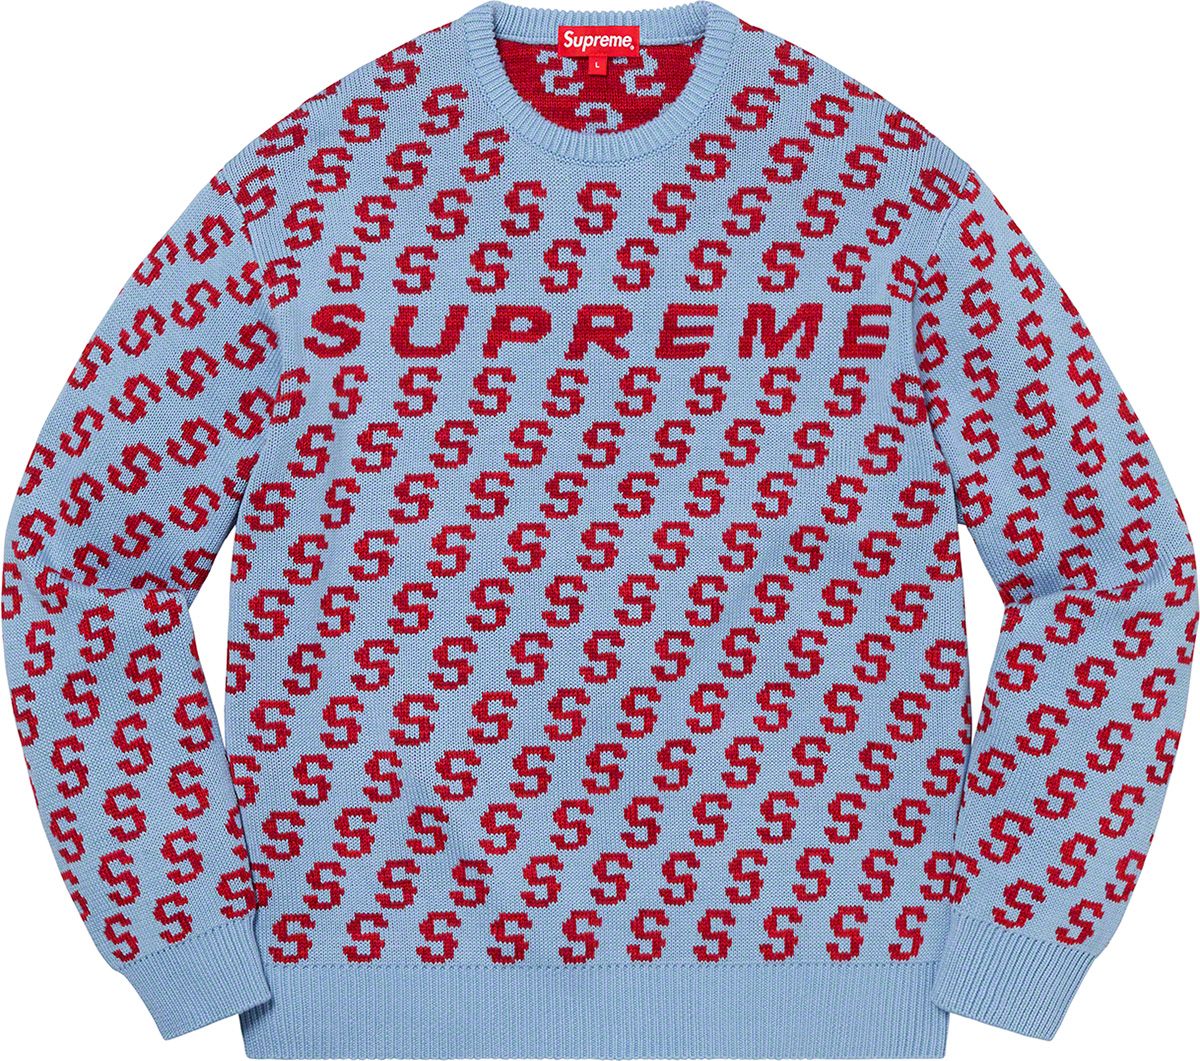 Stripe Sweater Vest - Spring/Summer 2021 Preview – Supreme